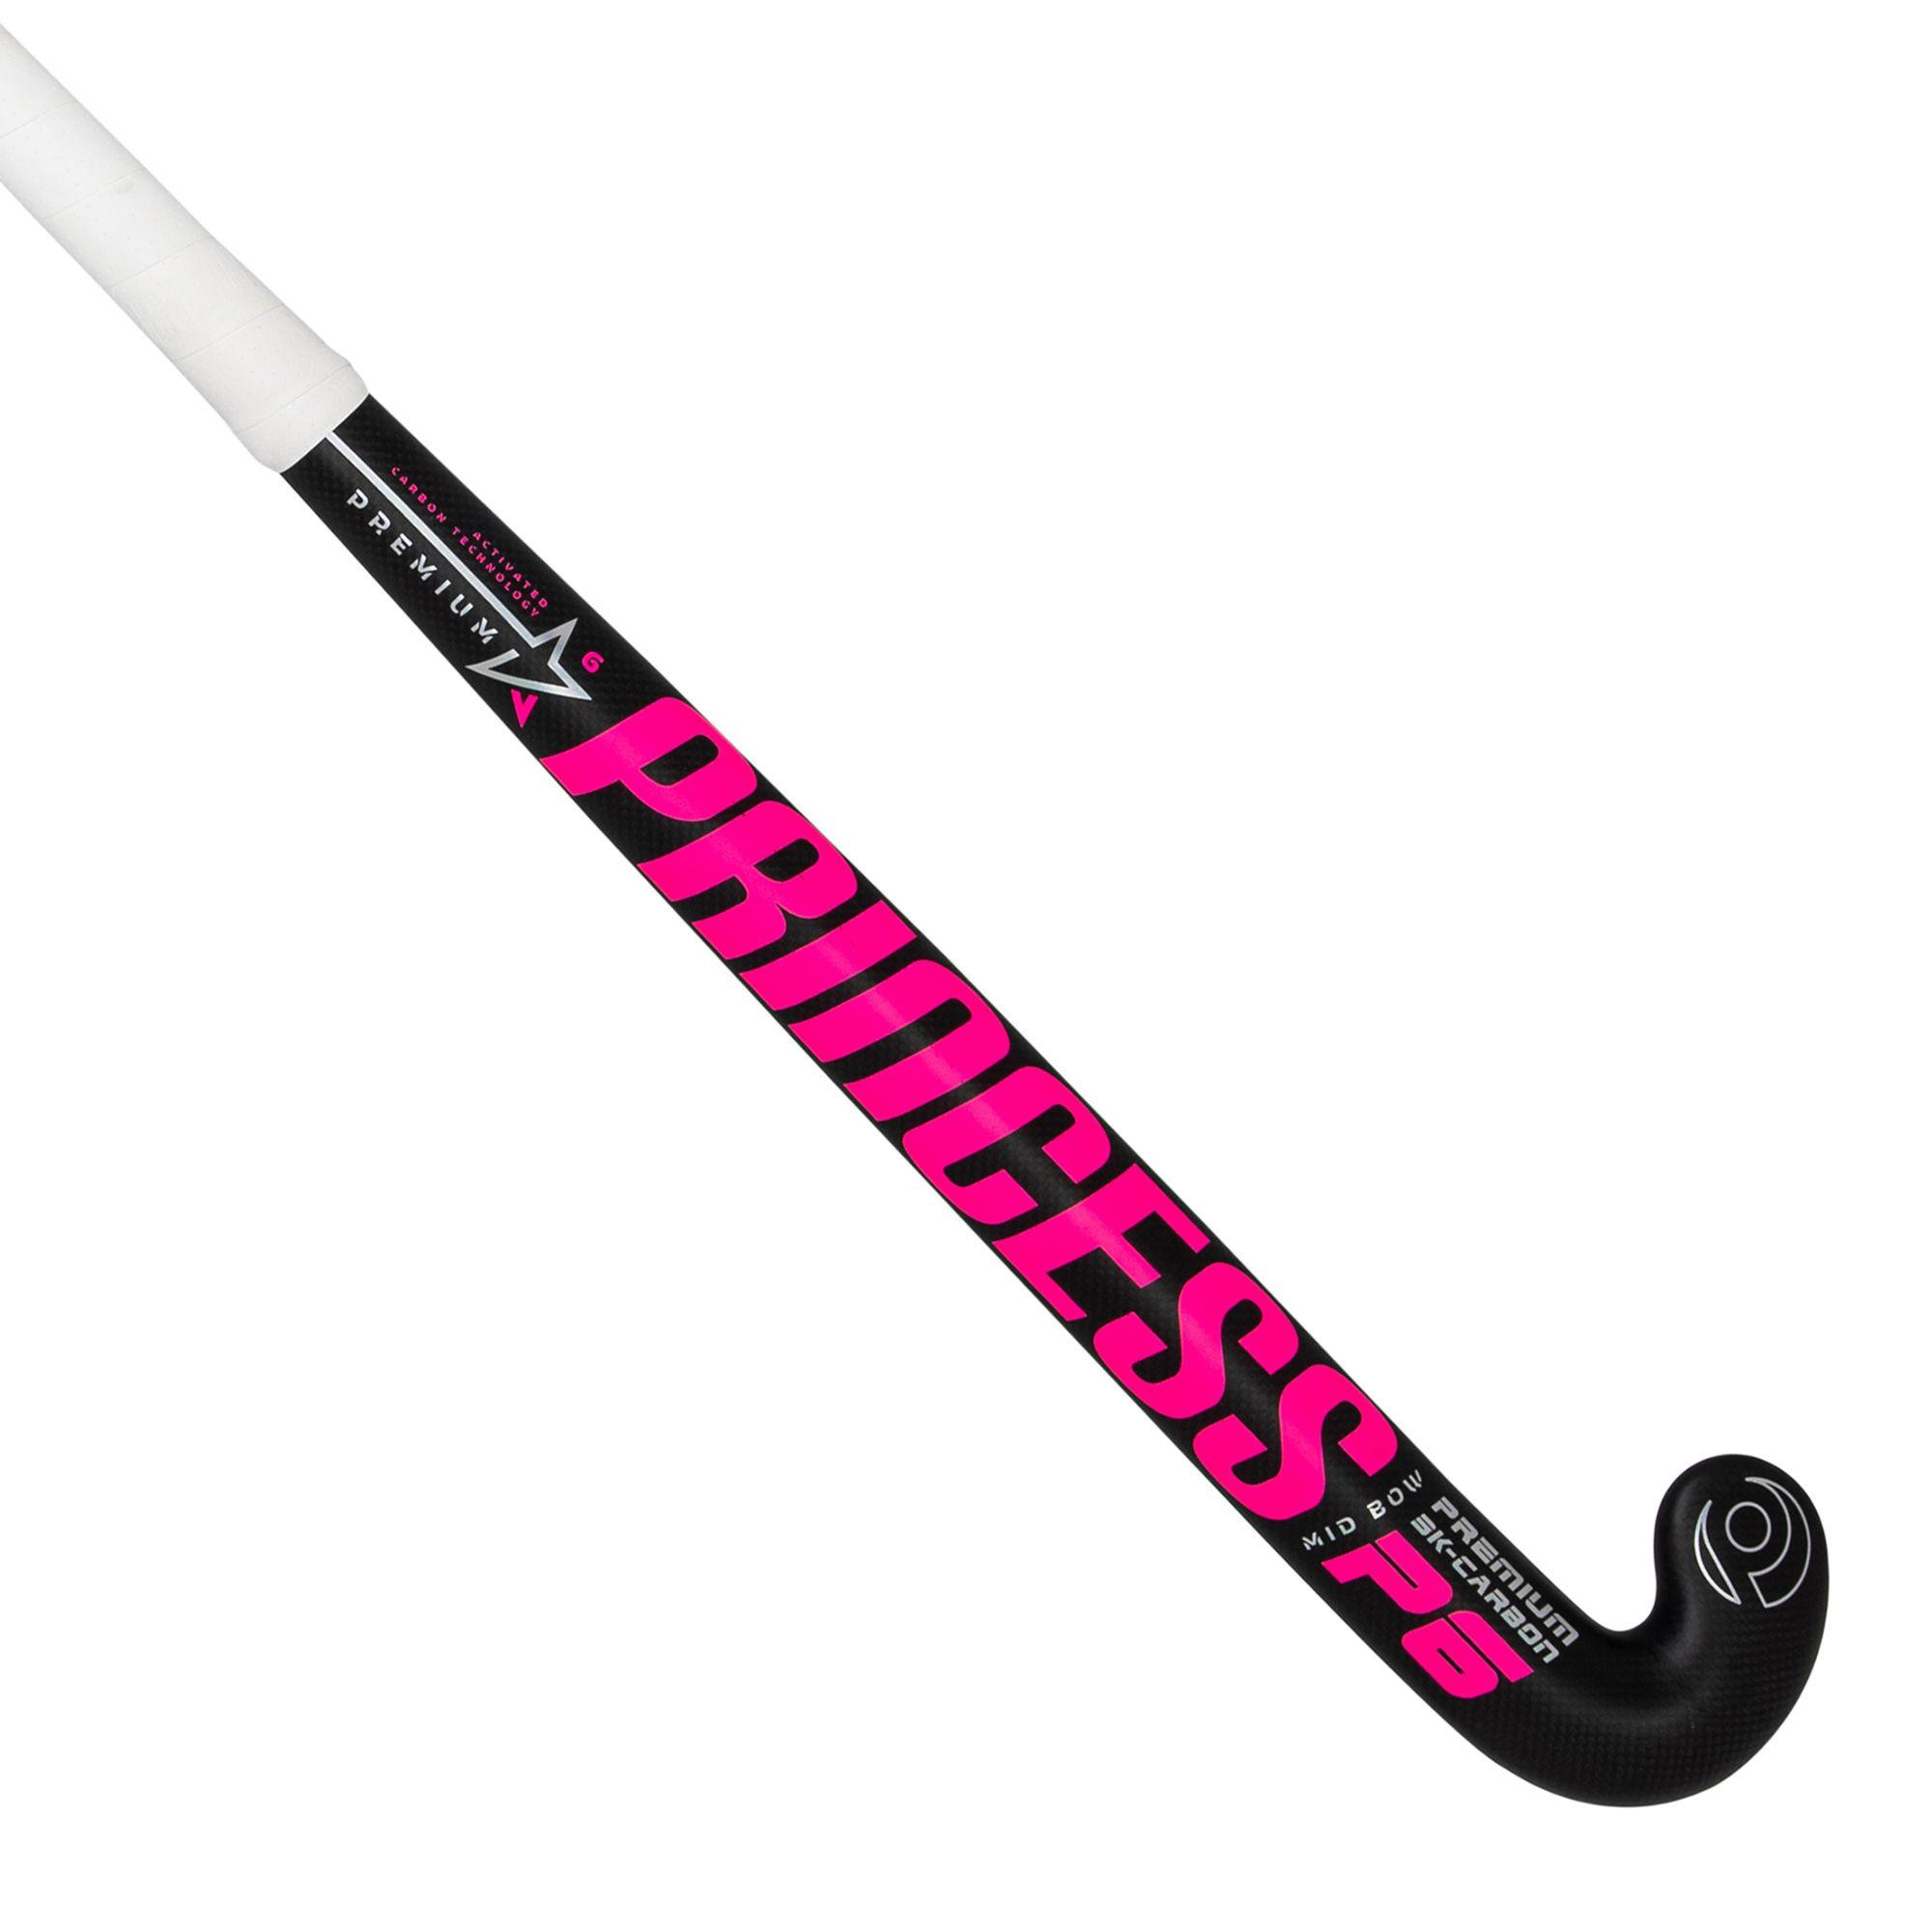 Hockeystick Premium 6 Star SG9 Lowbow